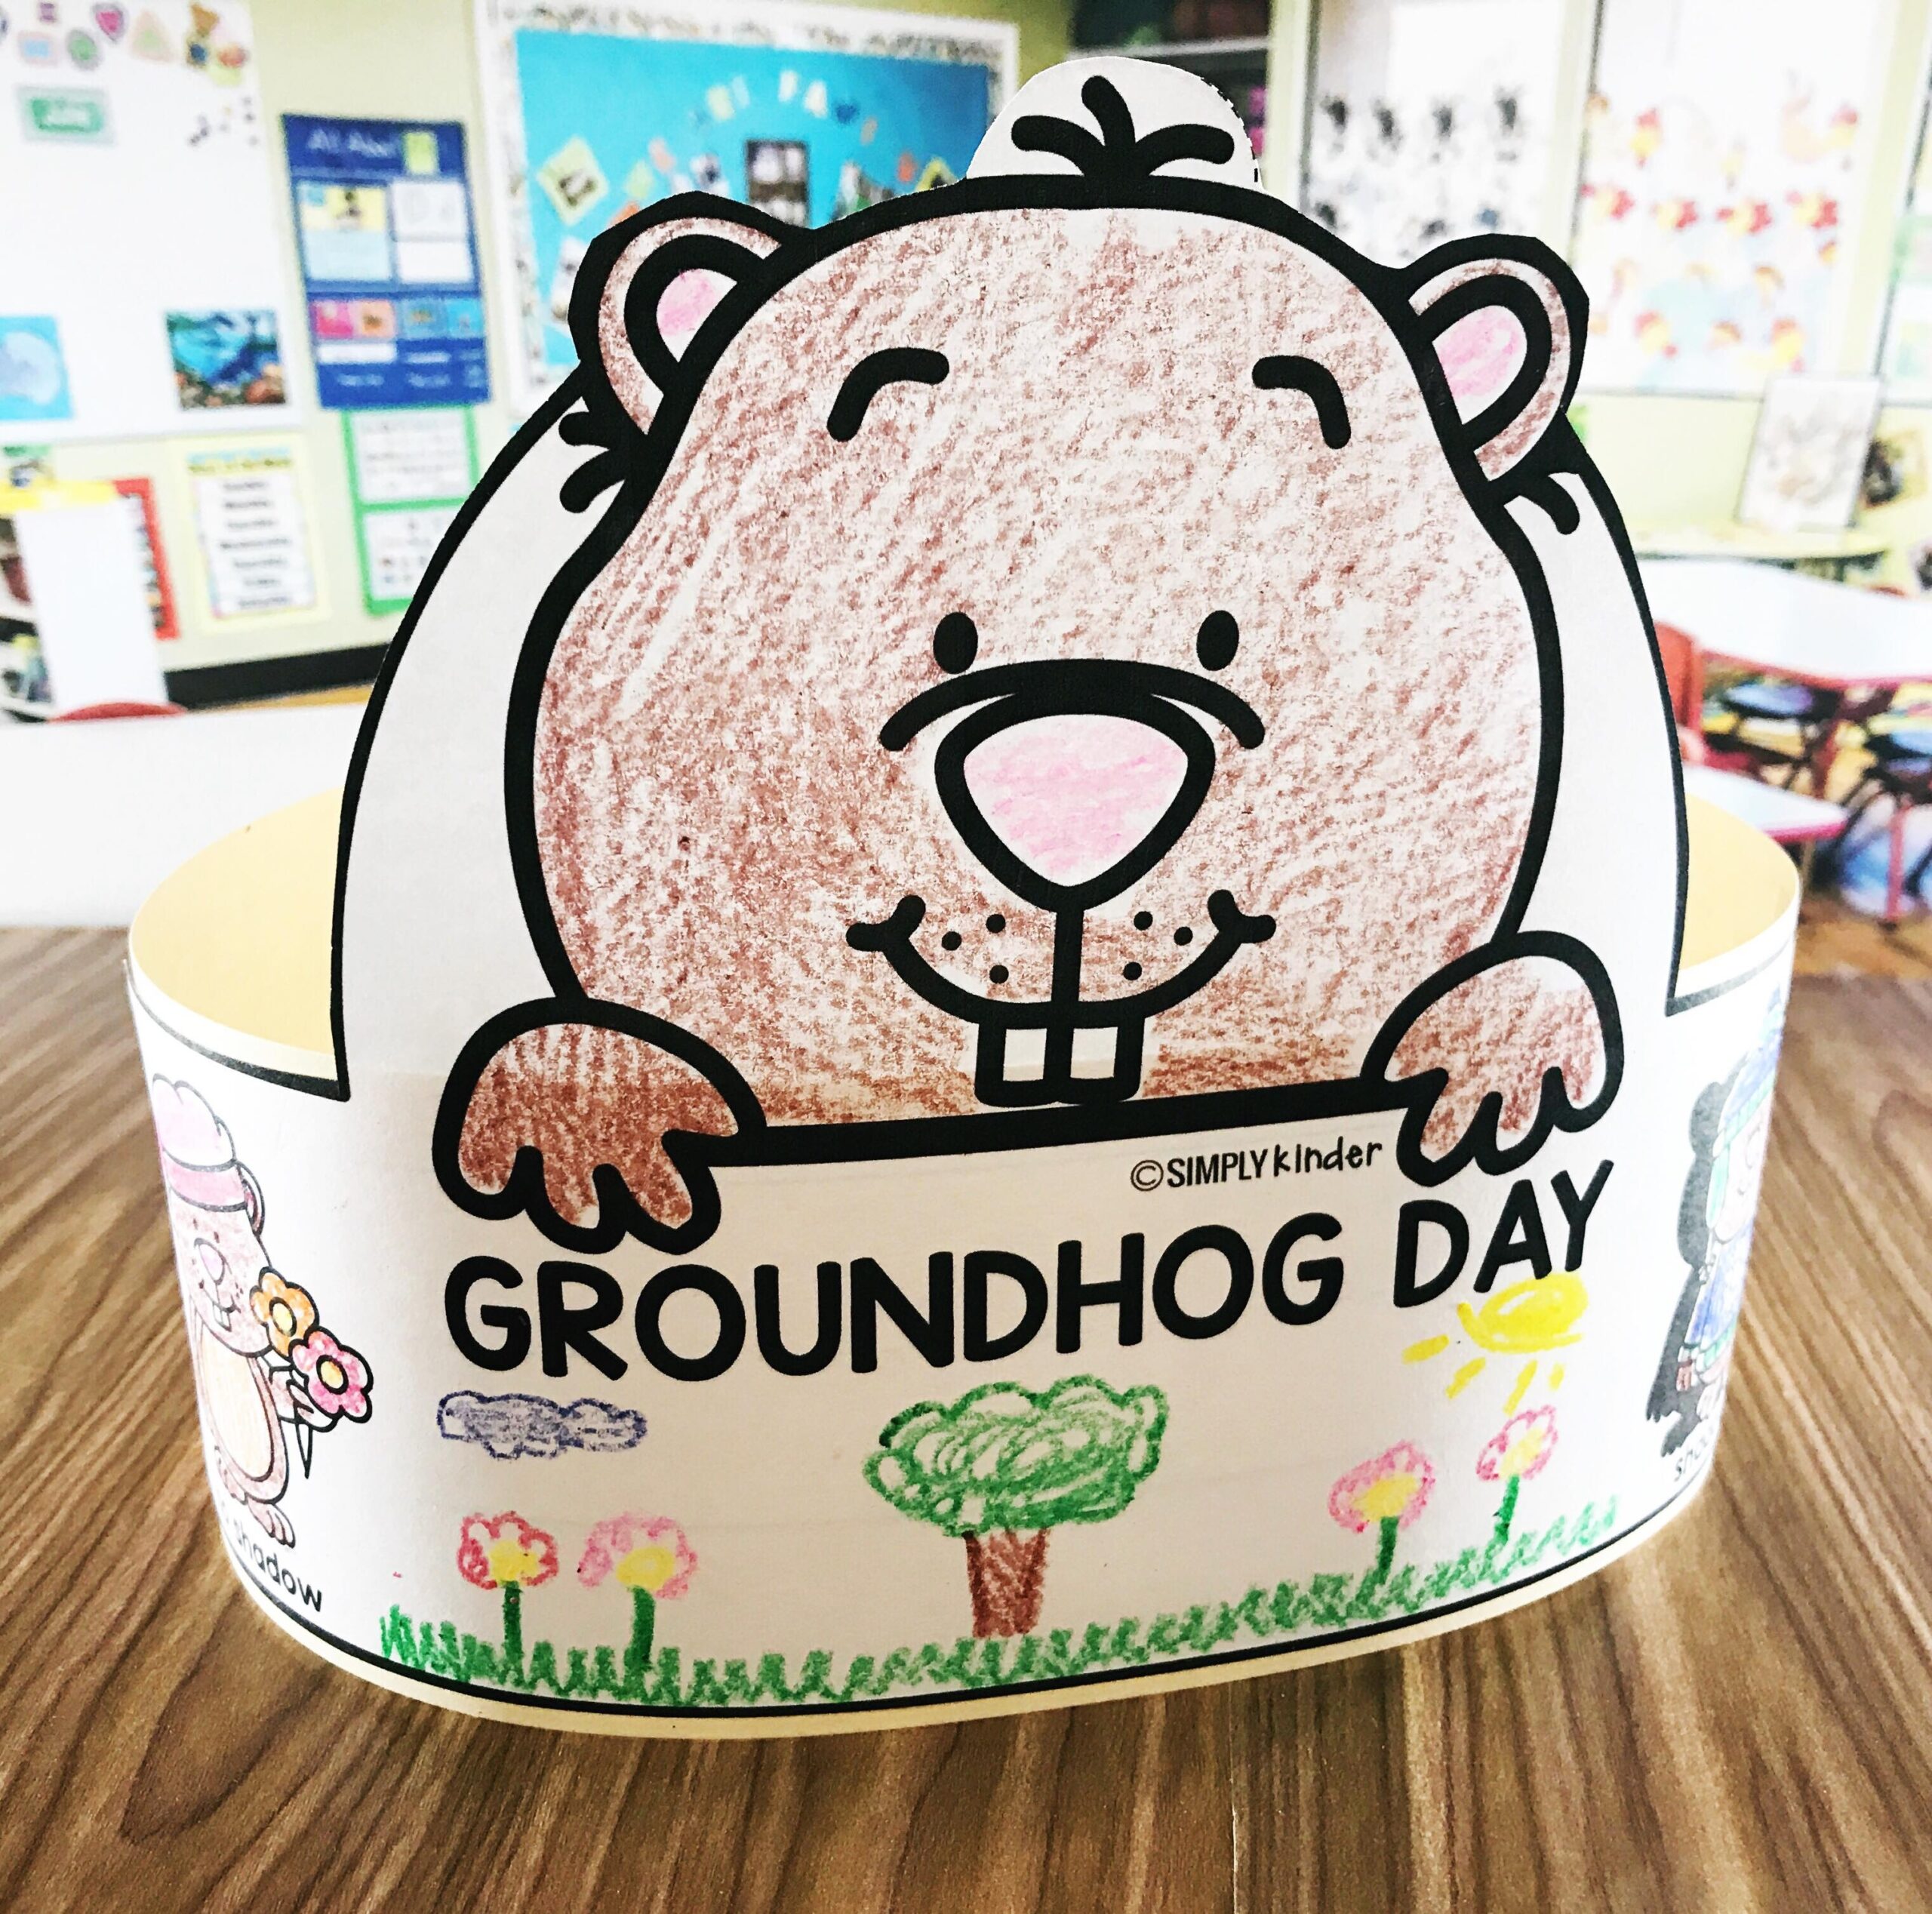 Free Groundhog Day Hat Simply Kinder